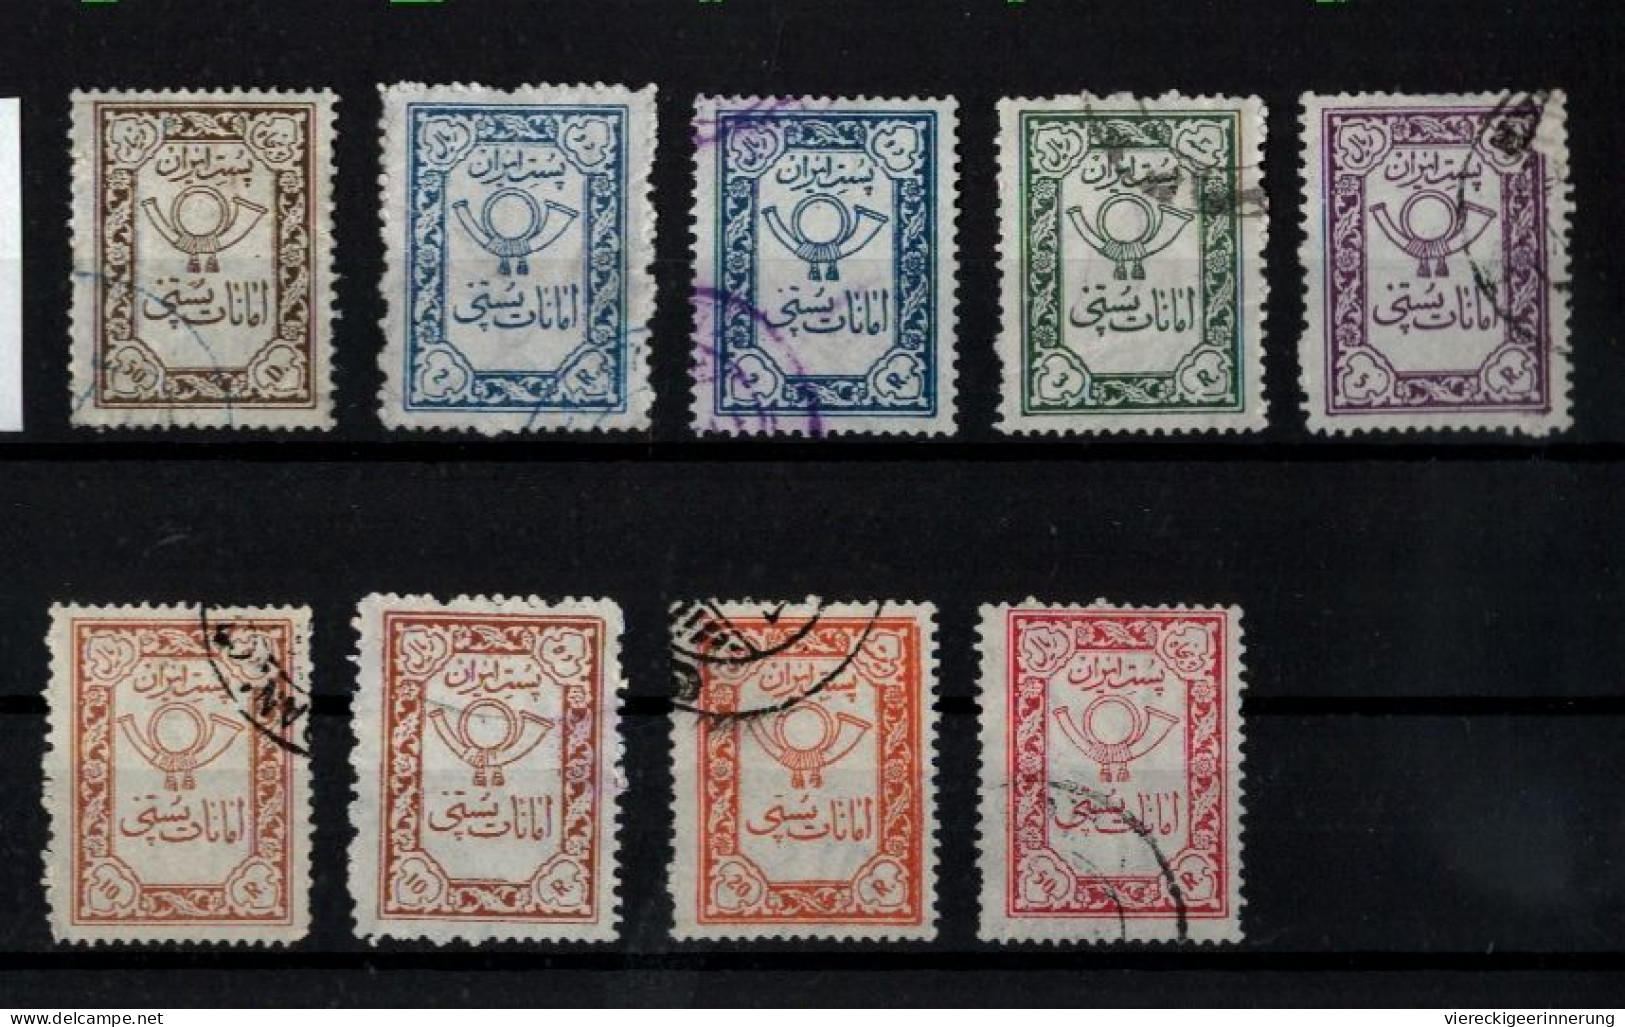 ! Paketmarken, Lot Of 9 Stamps From Persia, Persien, Iran - Iran